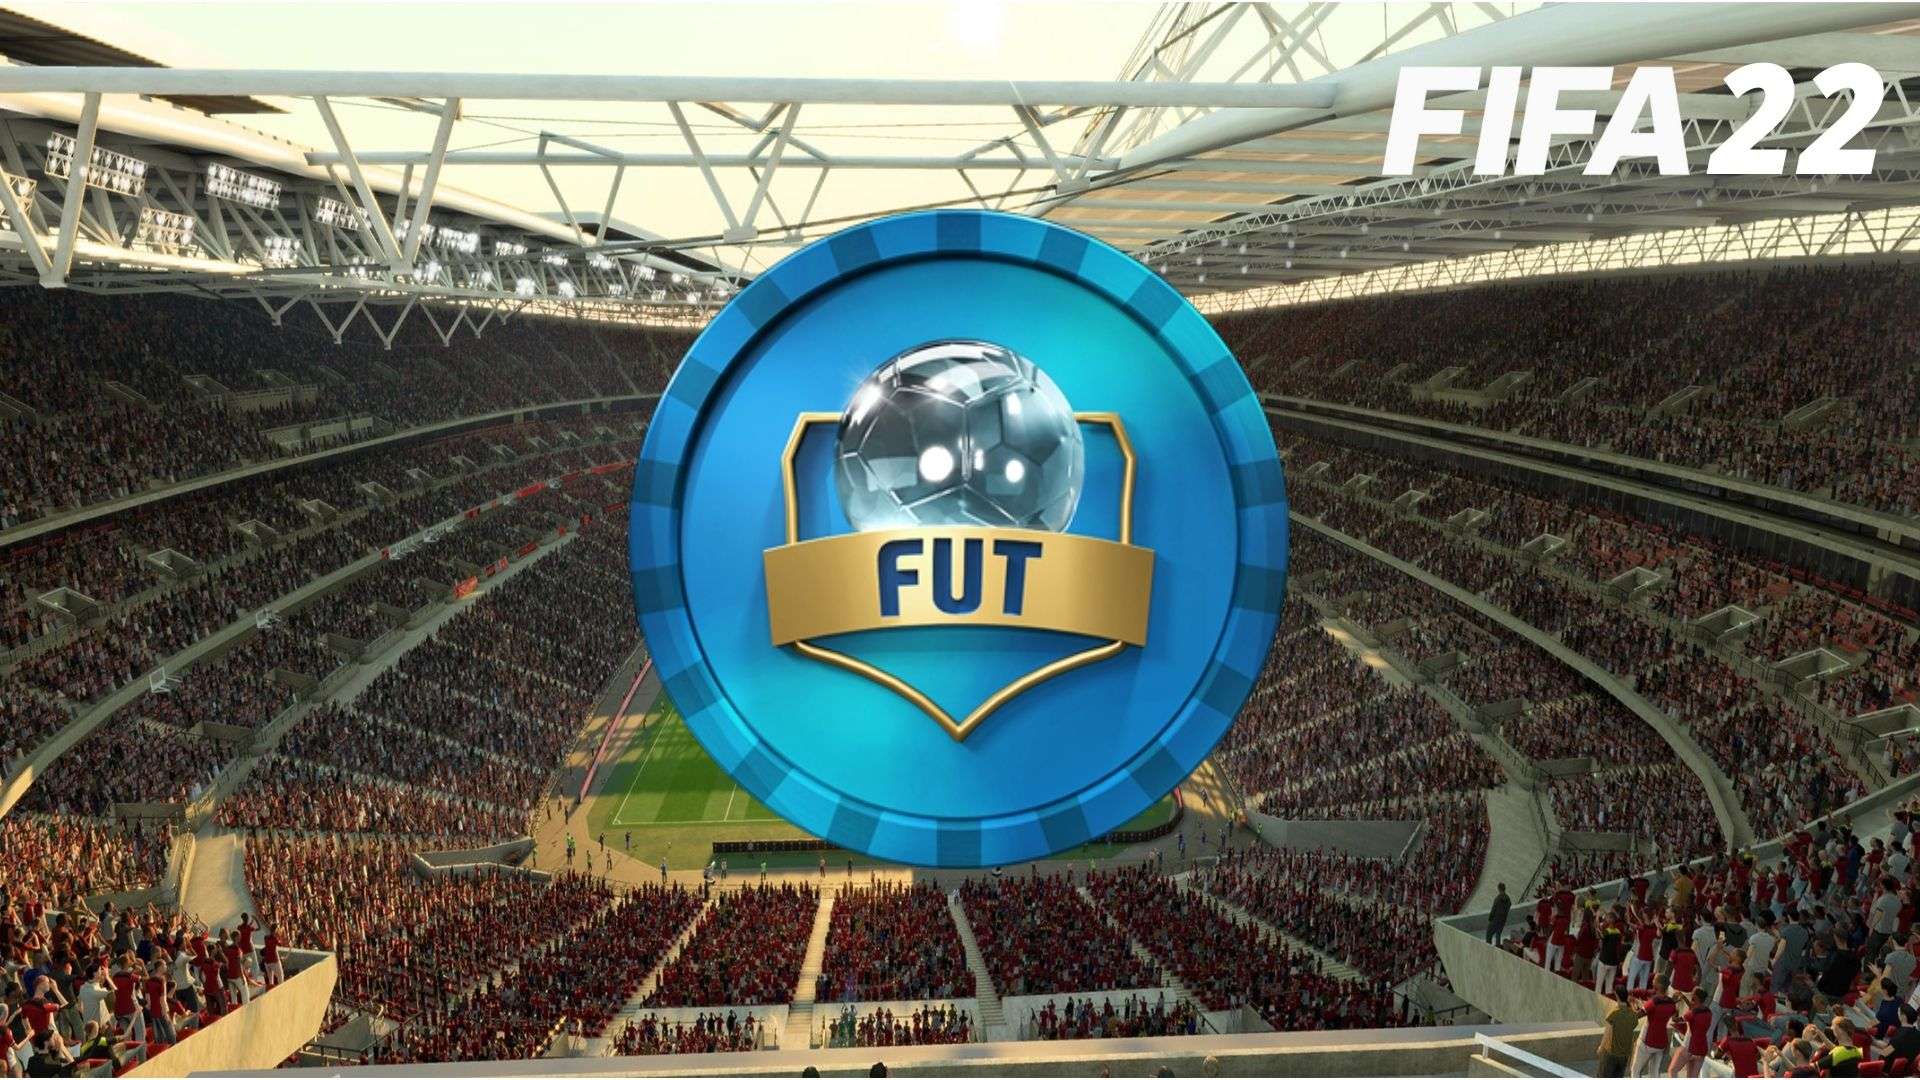 FIFA 22 FUT Draft token on top of Wembley